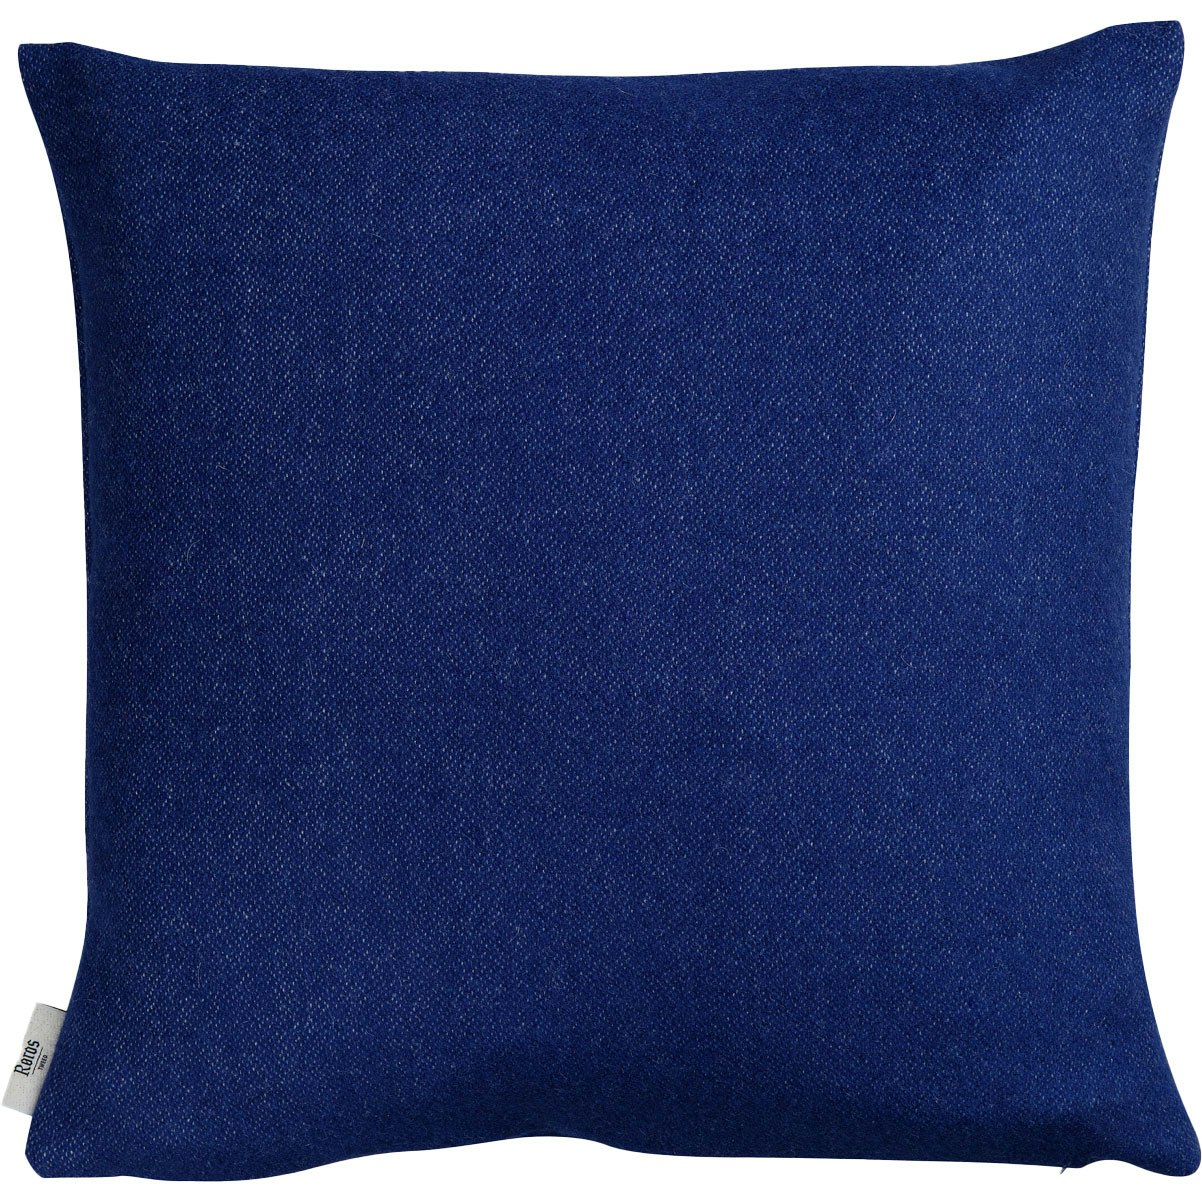 Stemor Cushion 50x50 cm, Deep Blue